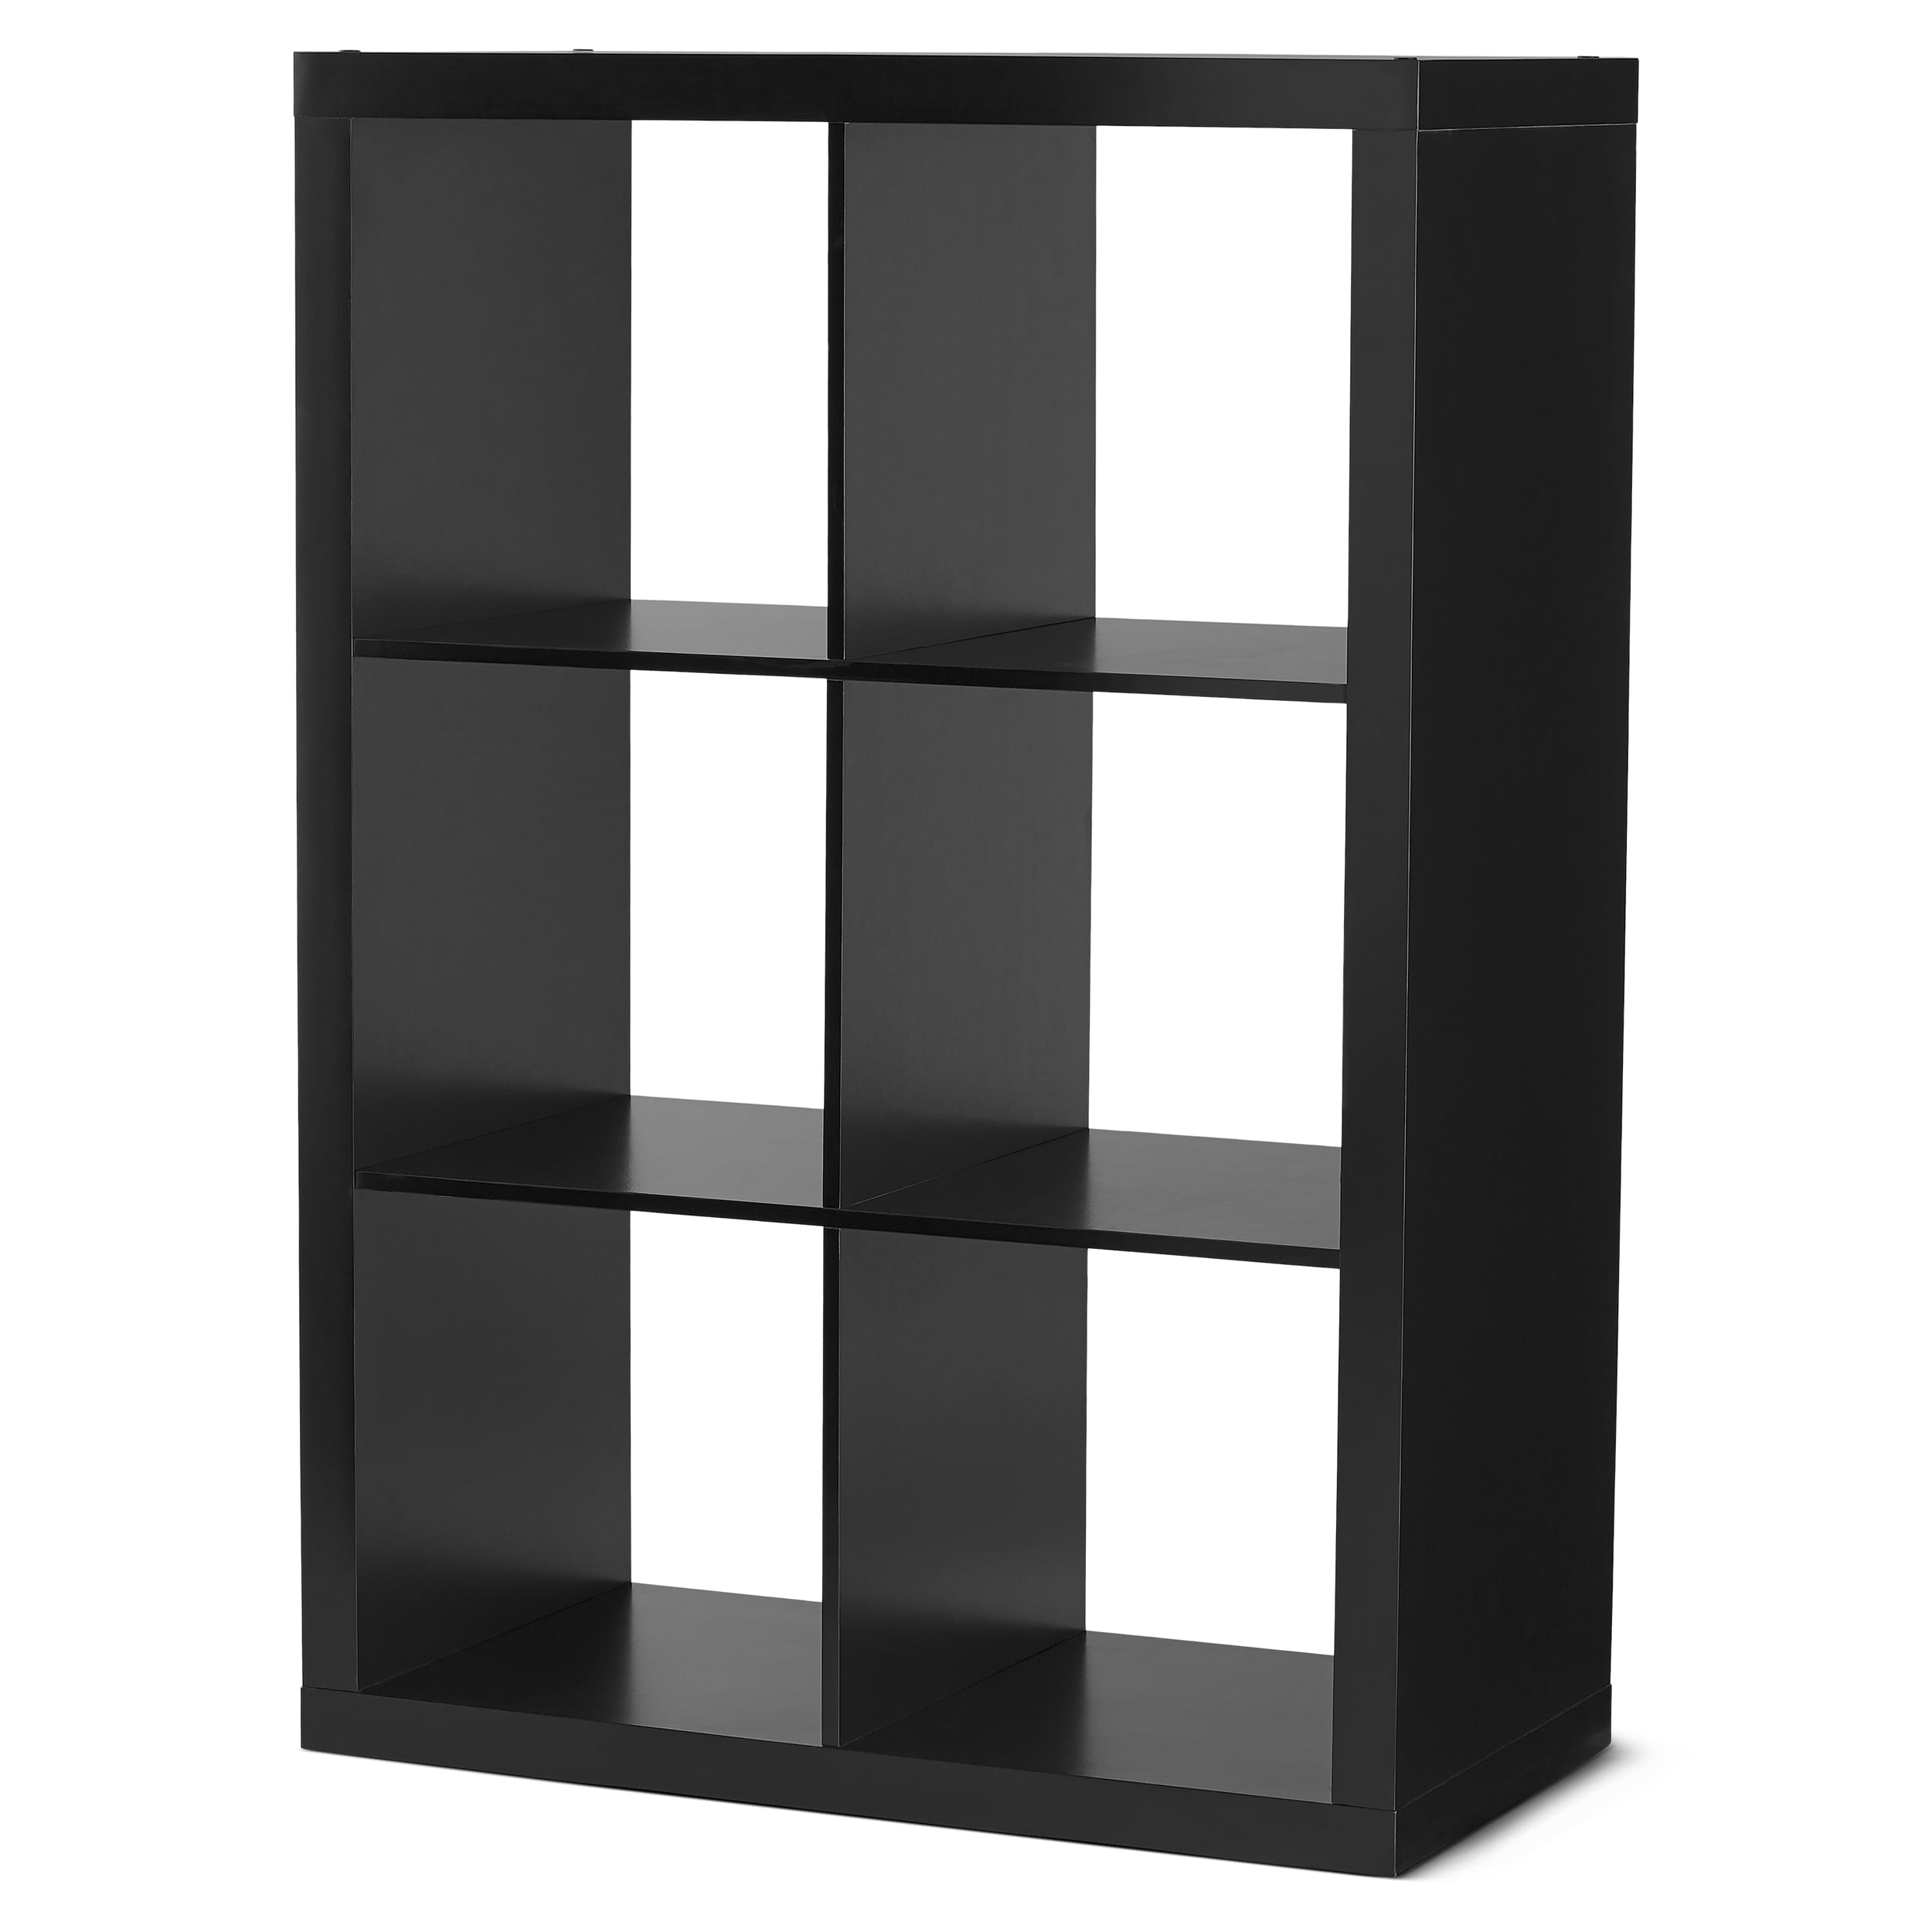 White FREE SHIPPING 6 Cube Bookcase Bookshelf Open Storage Shelves Organizer 